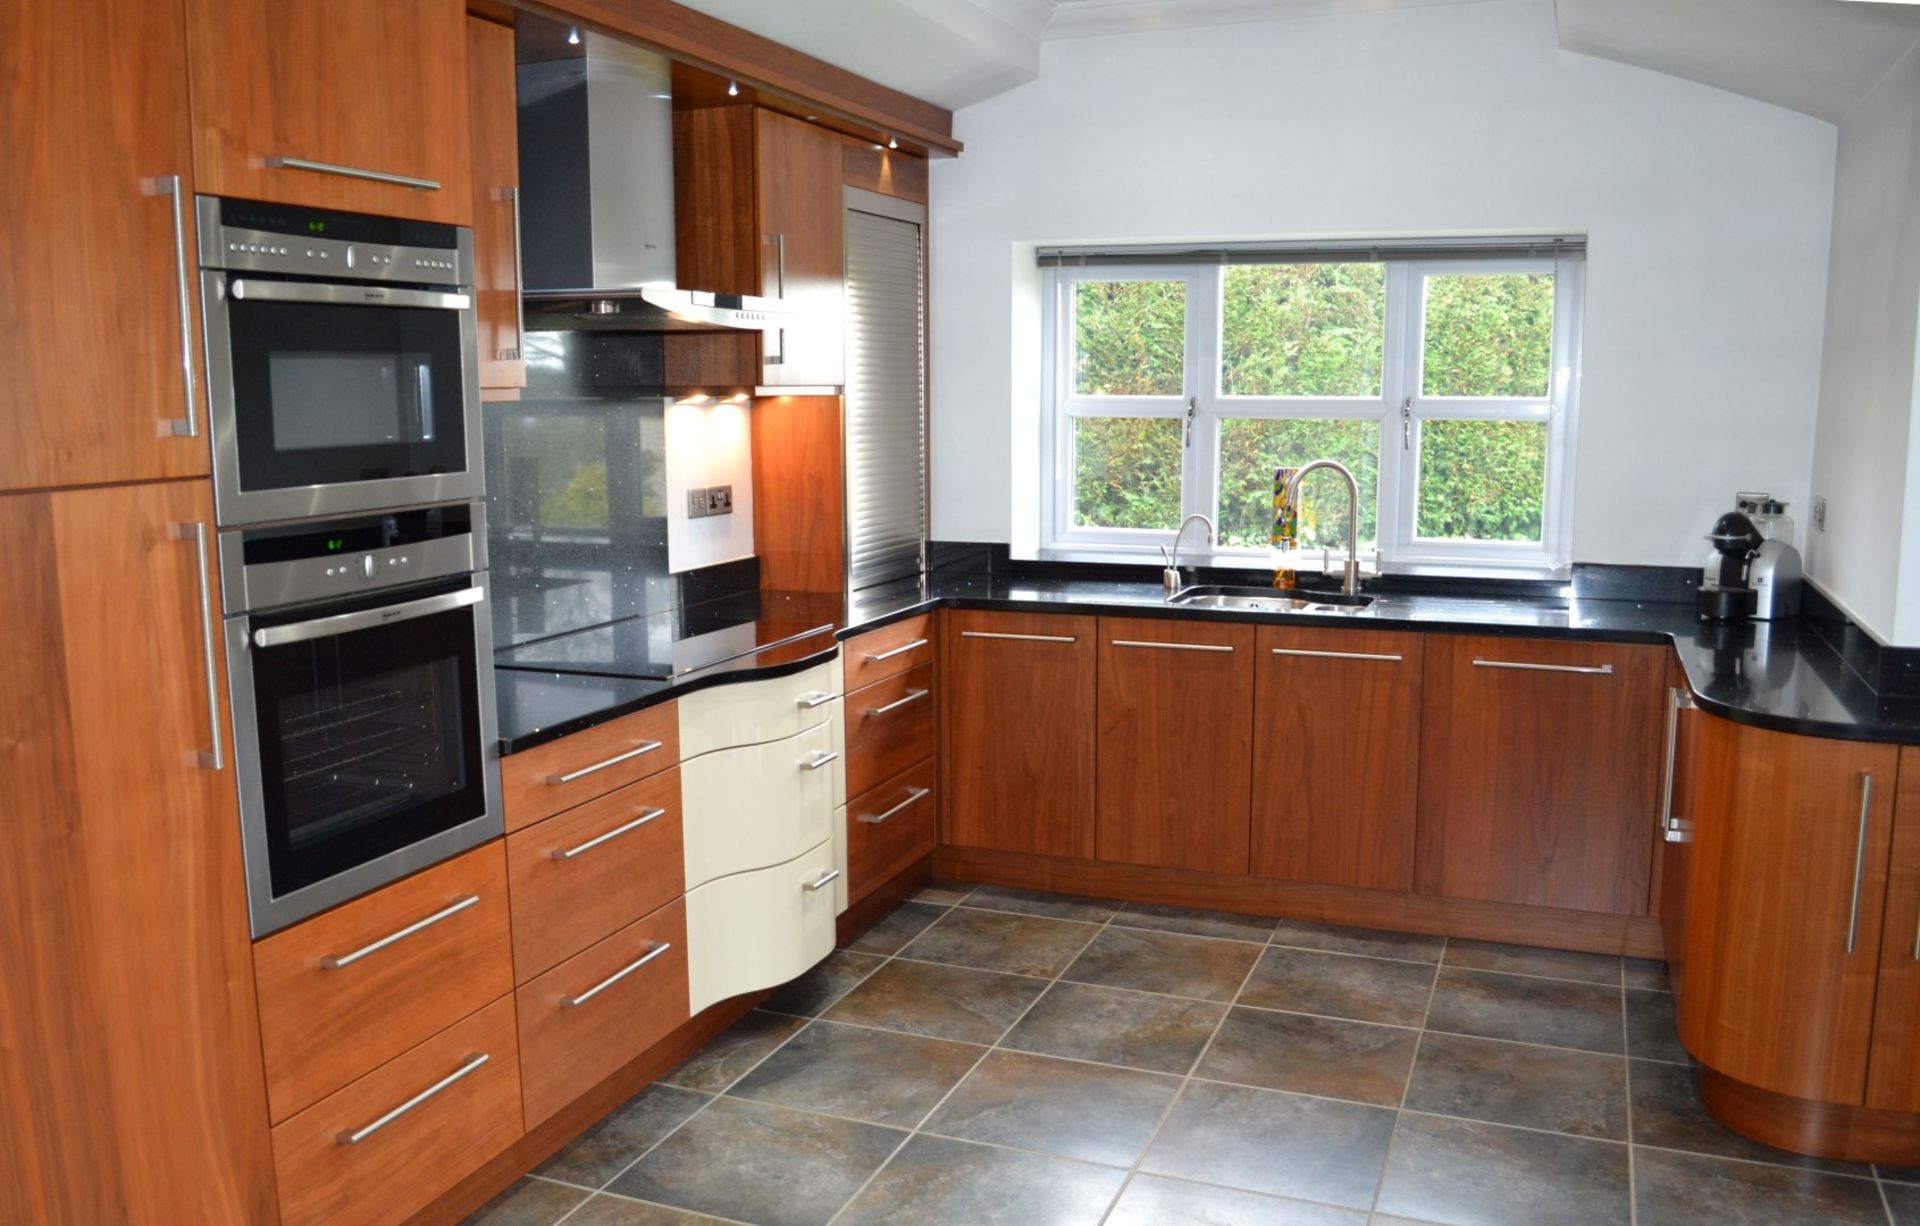 1 x Kitchen Design Bespoke Fitted Kitchen With Silestone Worktops & Neff Appliances - Superb - Image 59 of 59